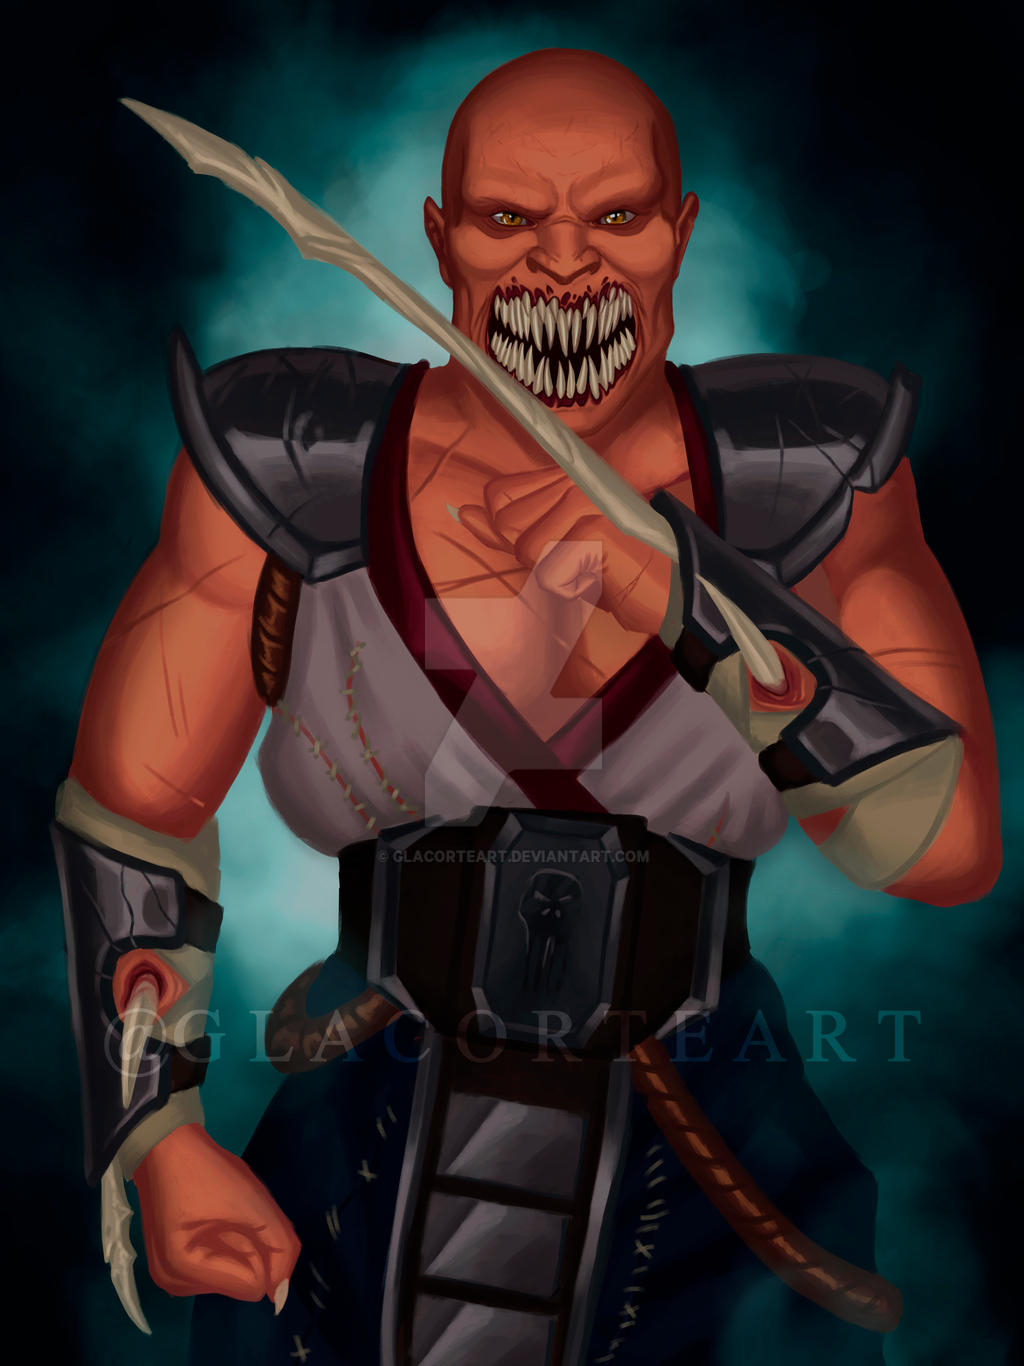 Baraka (Mortal Kombat 9) (1), Mortal Kombat Characters